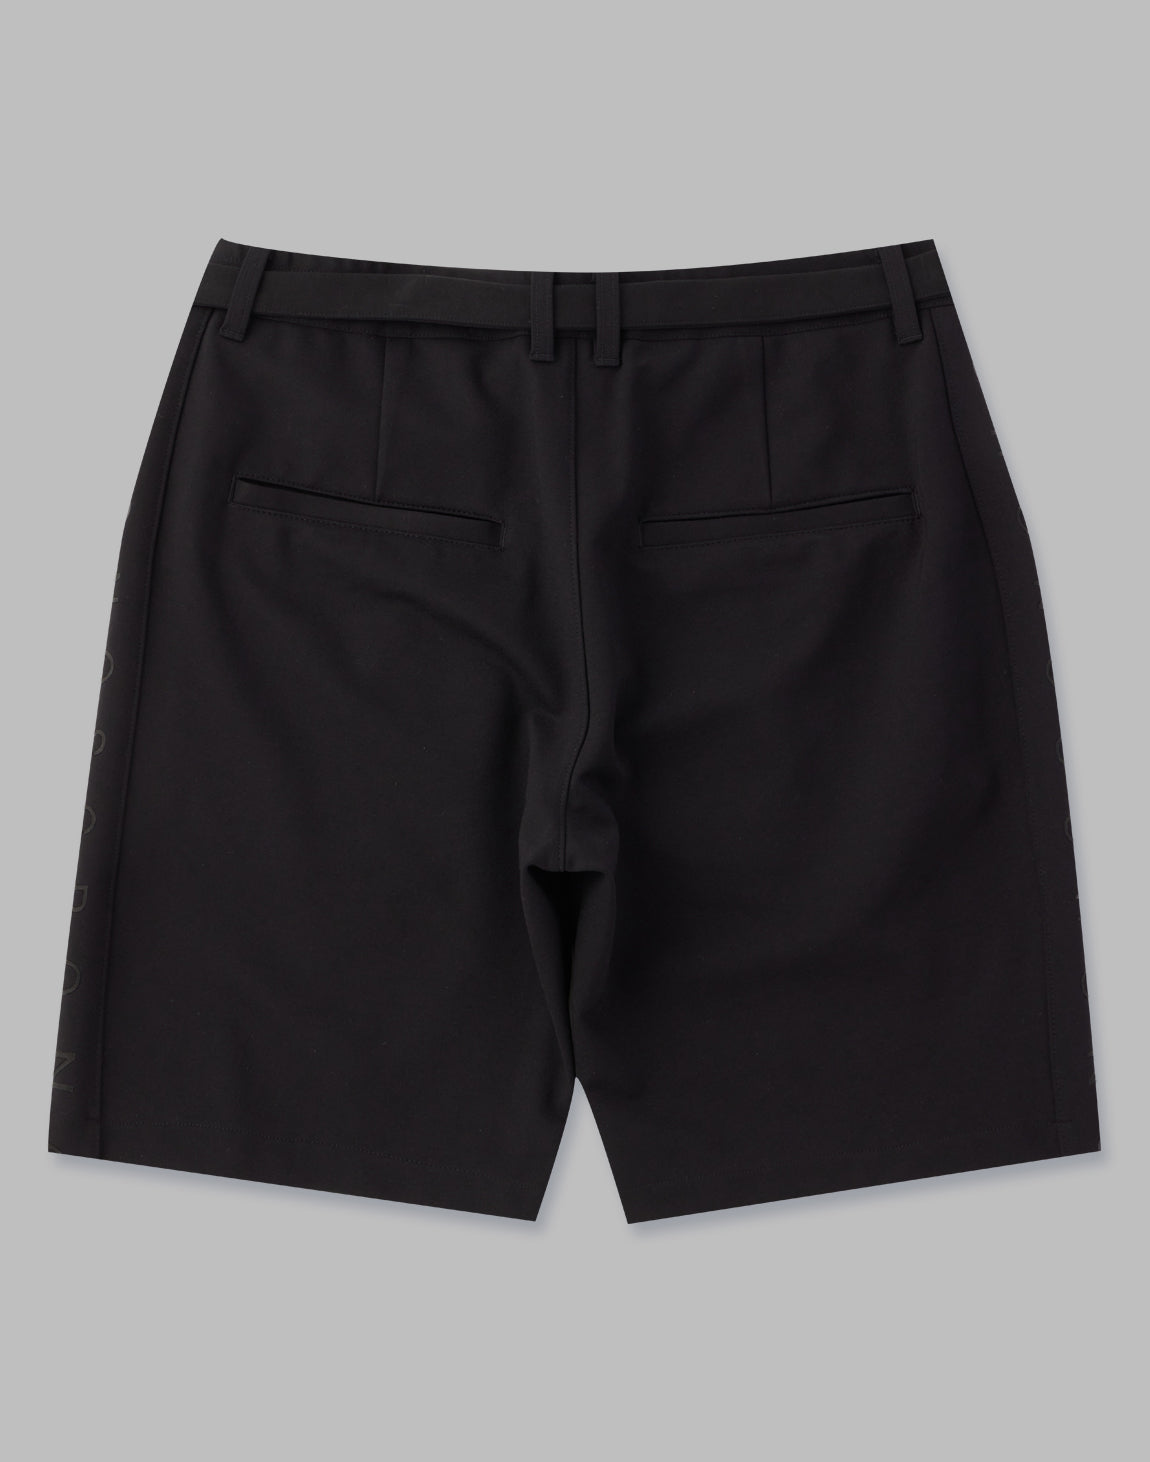 CRONOS BLACK STRETCH SHORT PANTS – クロノス CRONOS Official Store